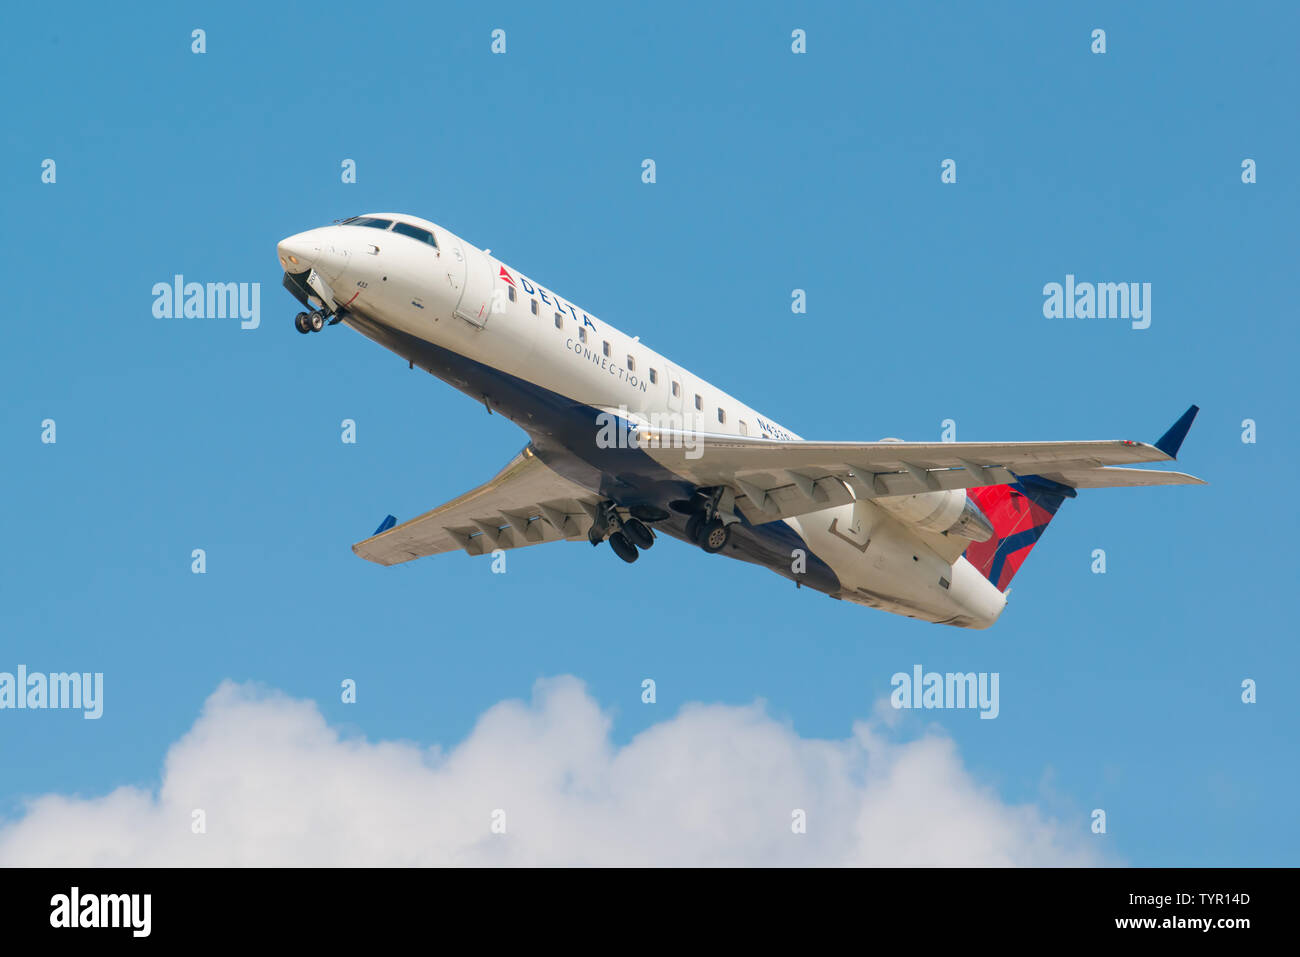 MINNEAPOLIS, Minnesota/USA - 25. JUNI 2019: Nahaufnahme von Flugzeug Flugzeug Abflüge weg von der MSP-Minneapolis/St. Paul Airport Stockfoto